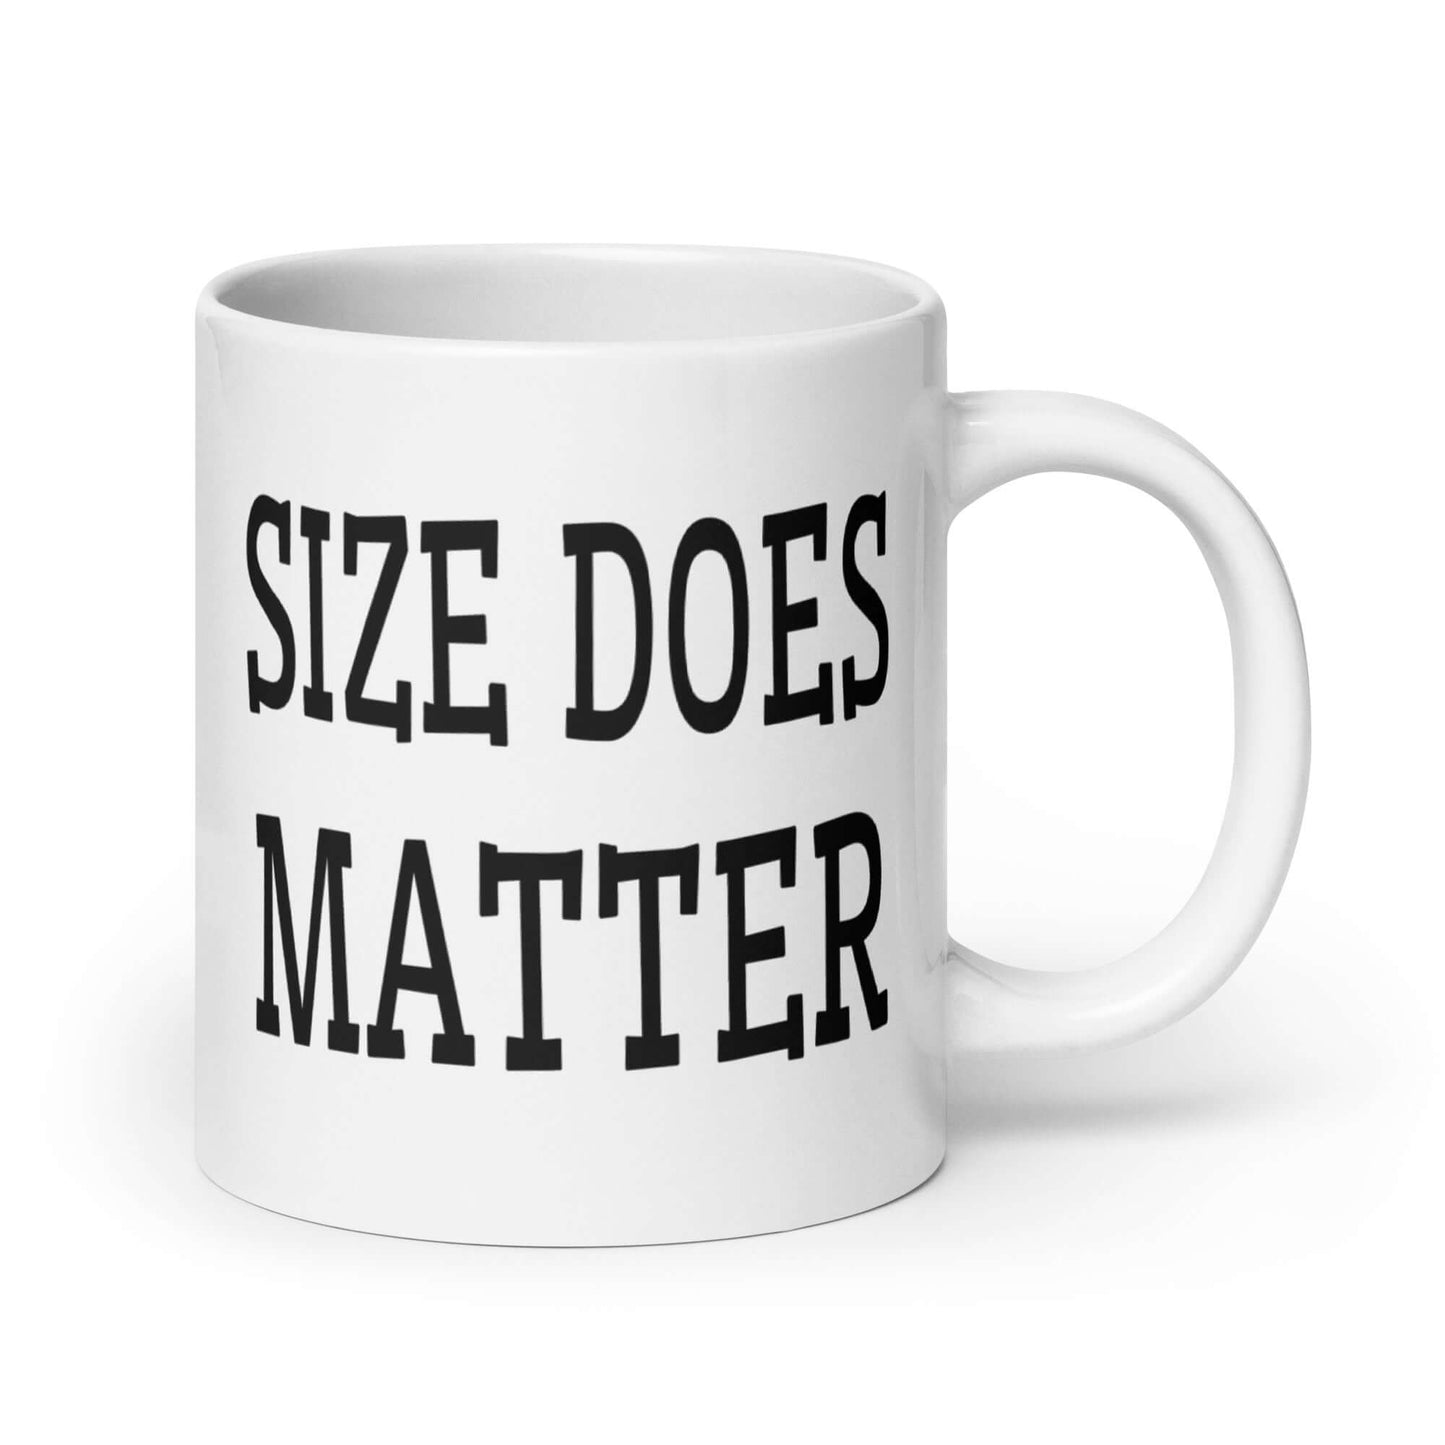 Size does matter ceramic mug